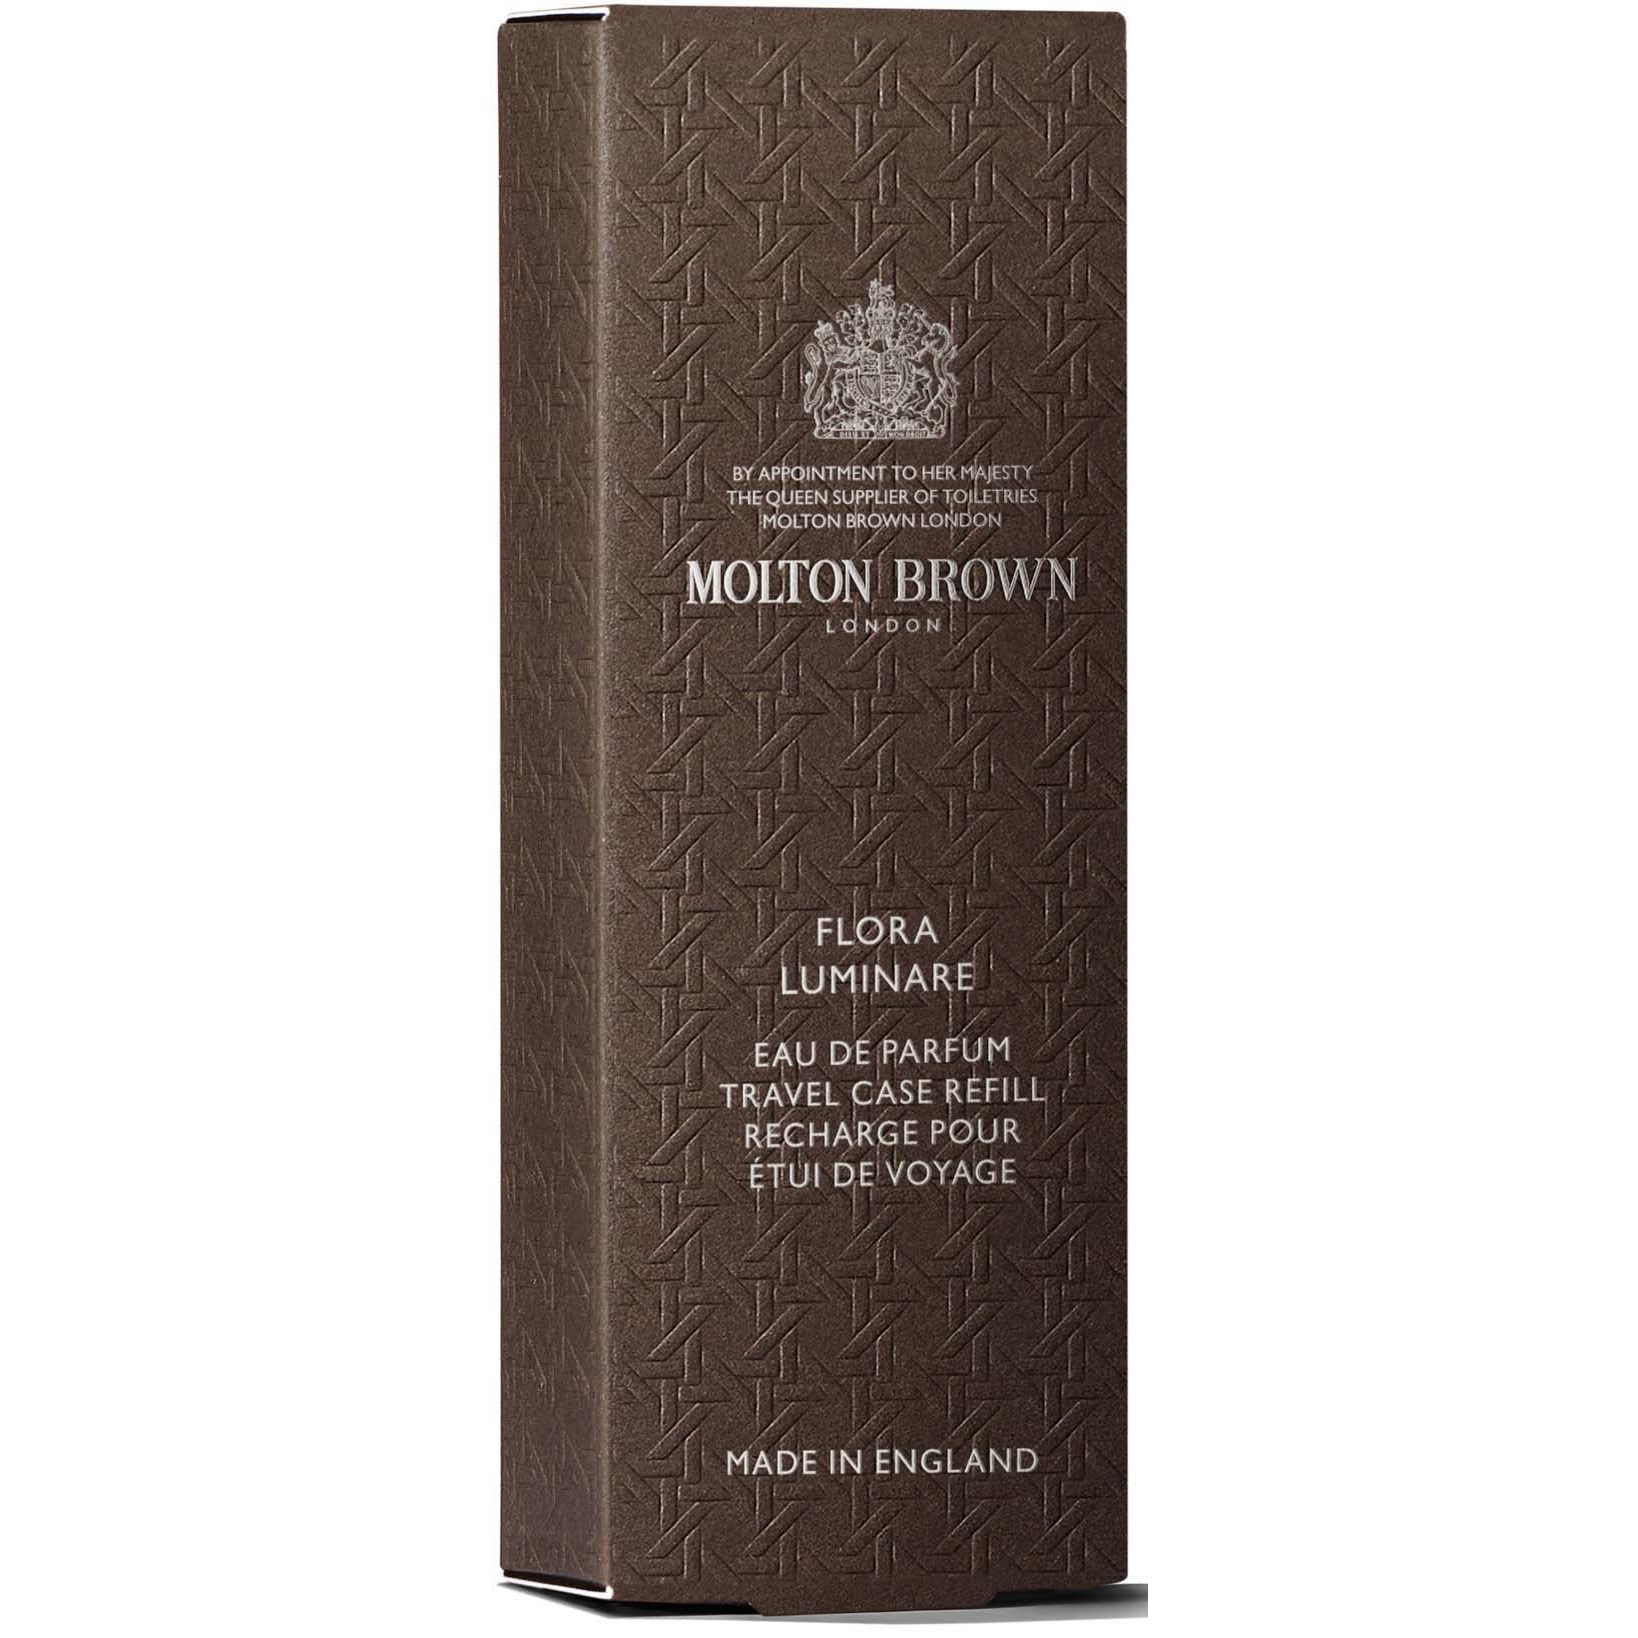 Molton Brown Flora Luminare Eau De Parfum Travel Case Refill